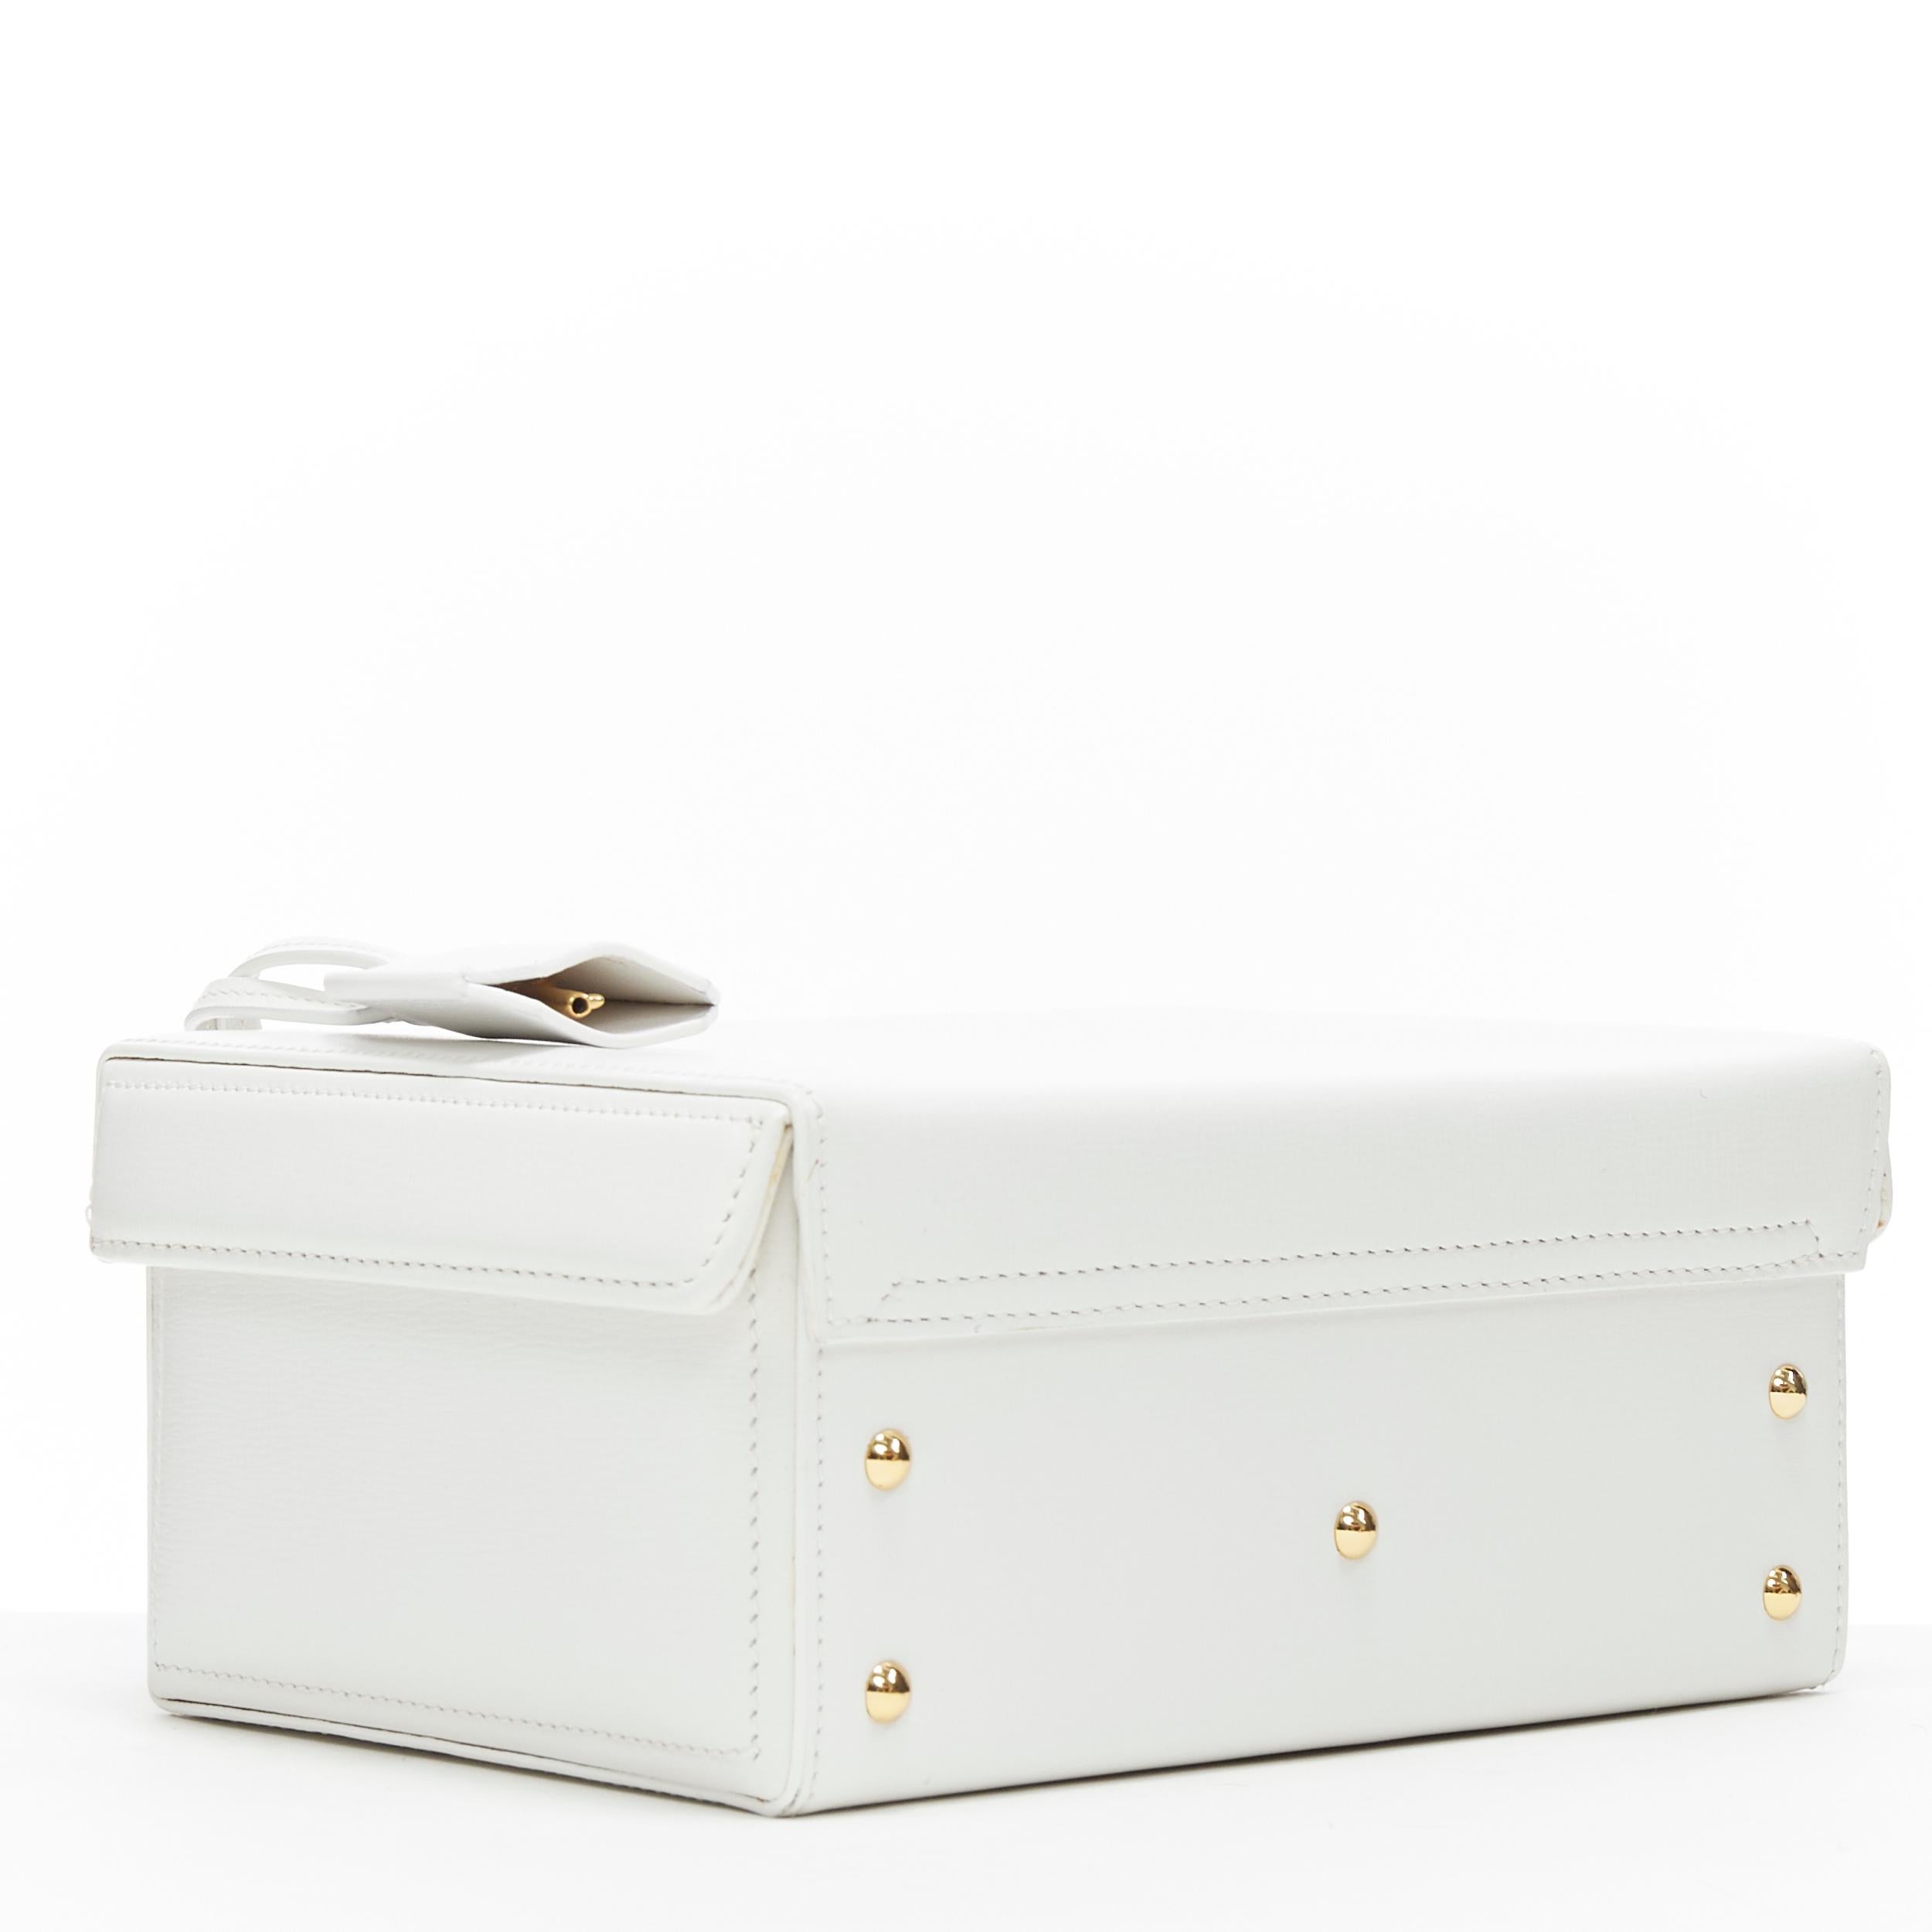 Women's MARK CROSS Small Grace white leather gold top handle satchel vanity box bag